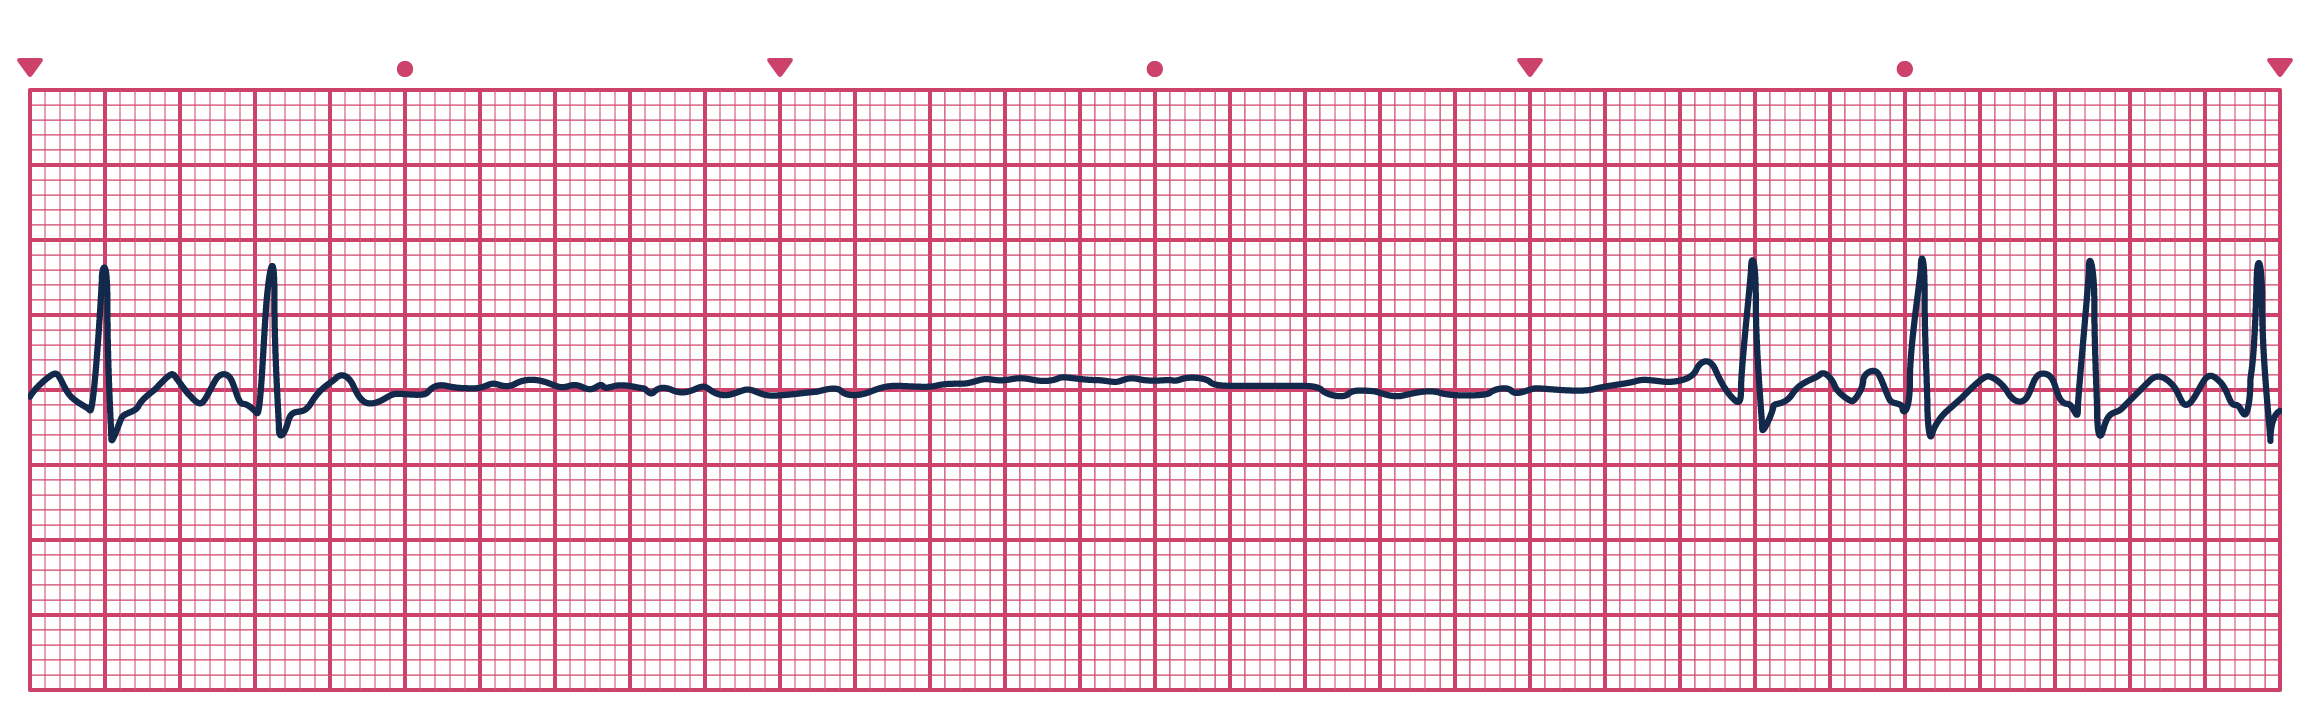 An ECG depicting Sinus Pause